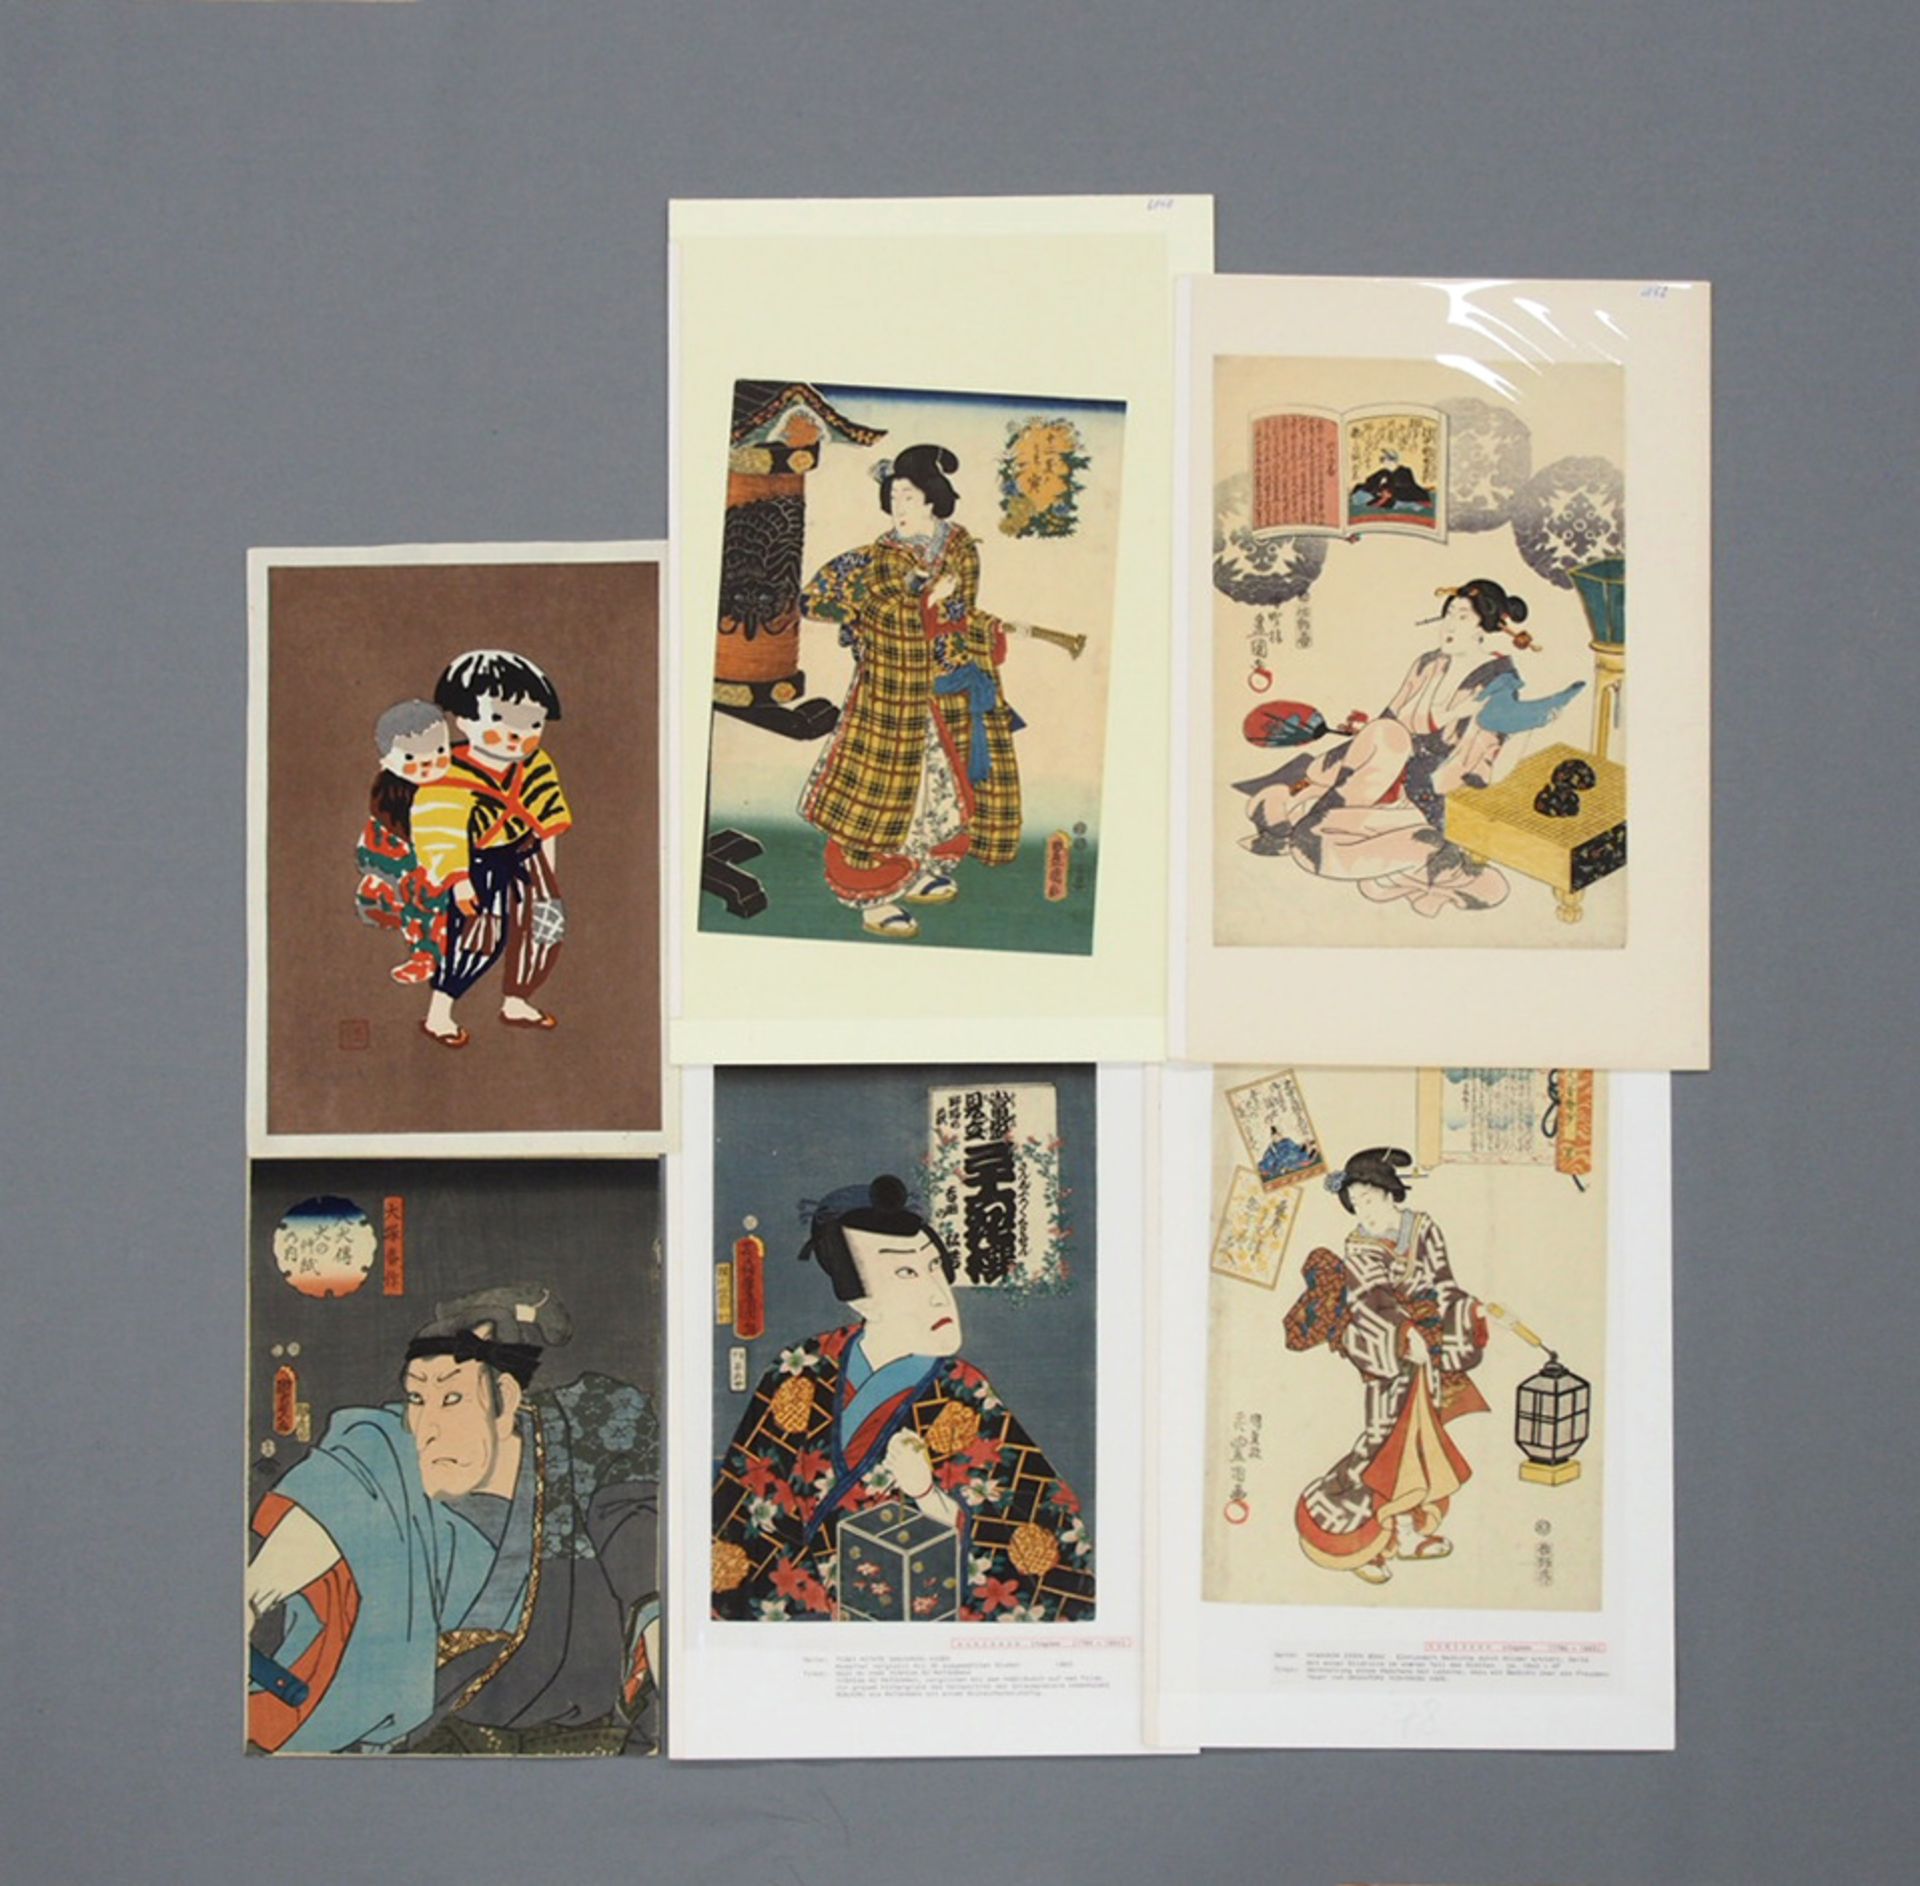 KUNISADA, Utagawa: Sechs Illustrationen